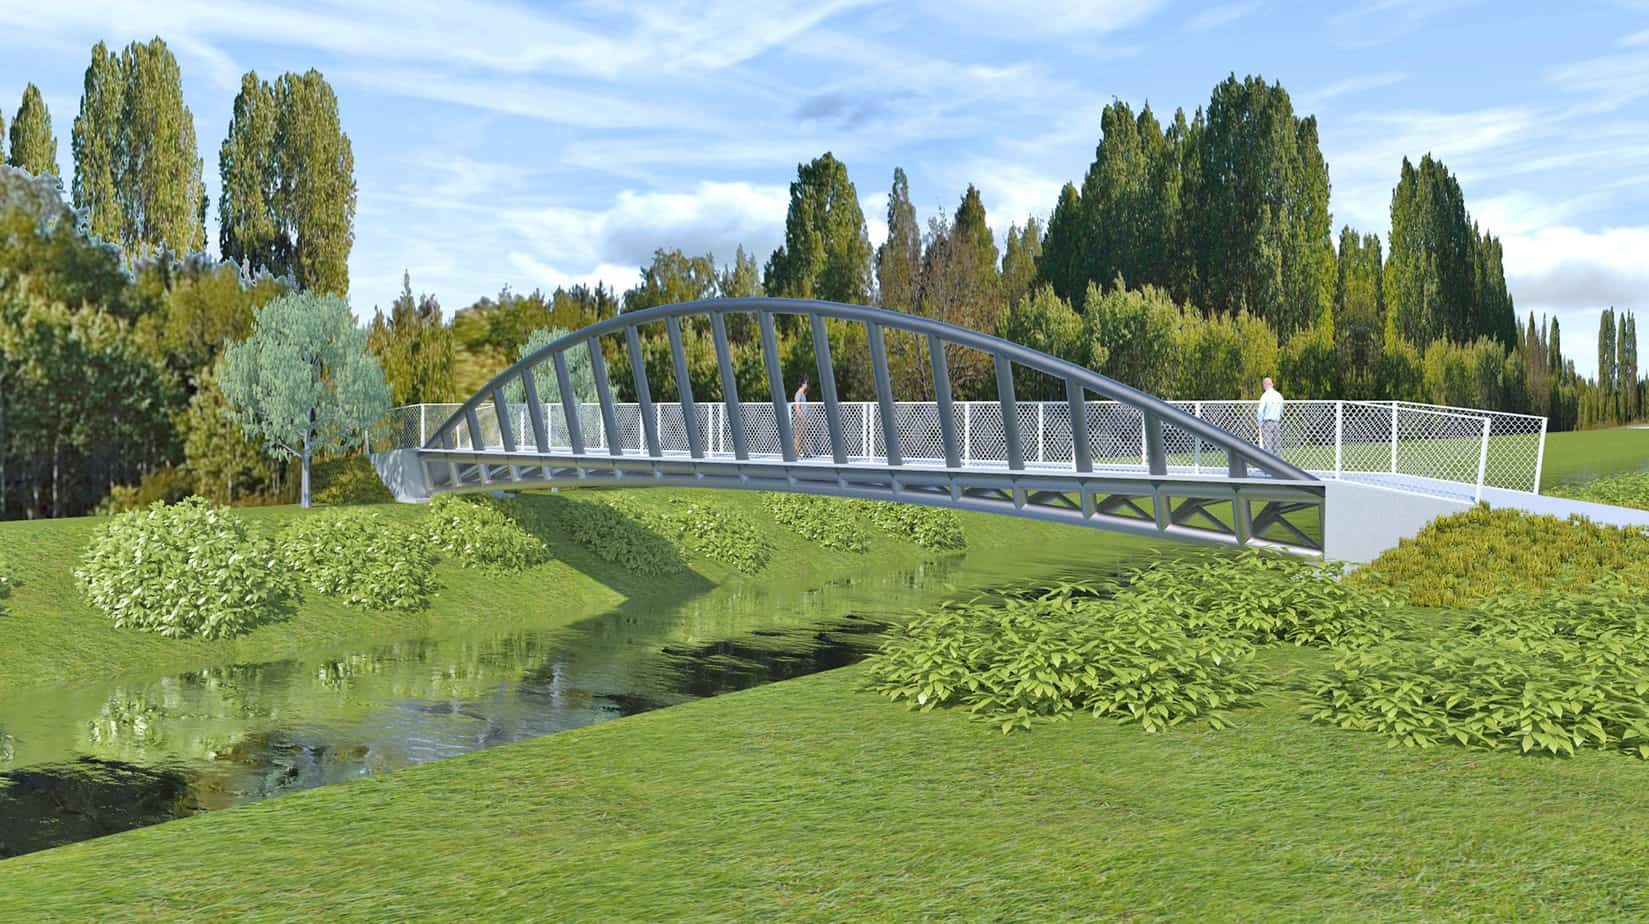 Un rendering del ponte pedonale ad arco